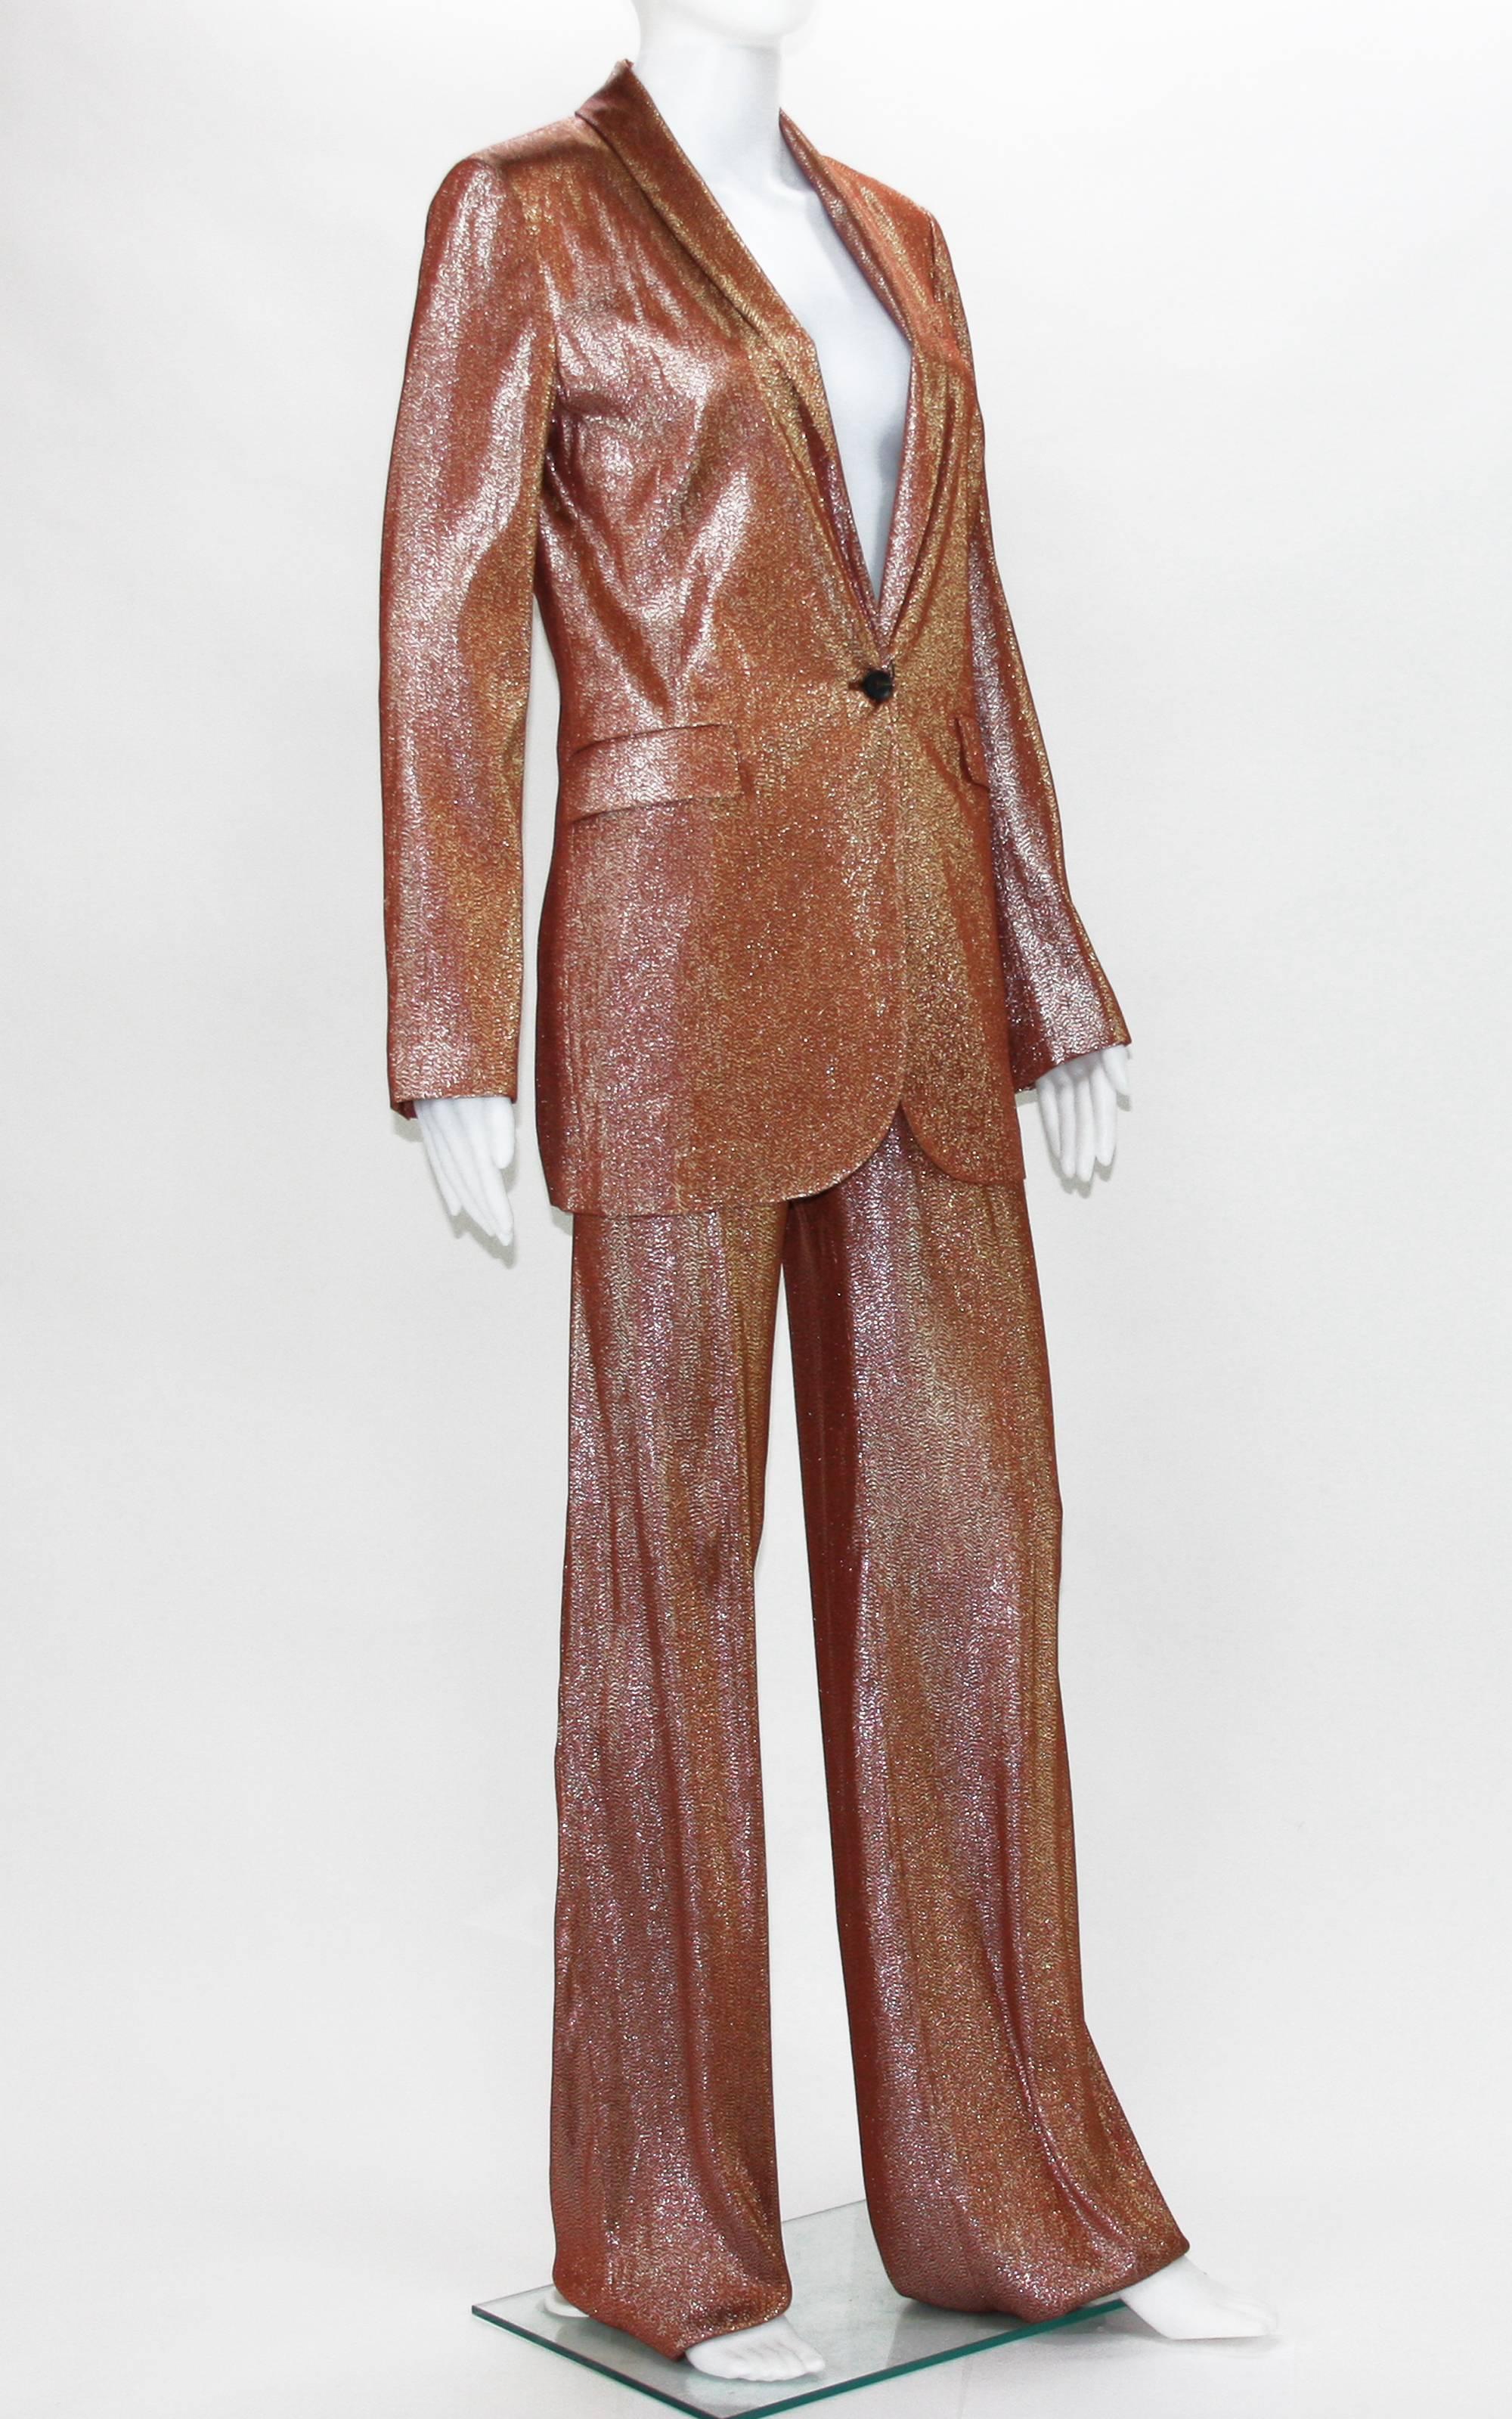 Brown New $3950 Runway GUCCI Suit Iridescent Rust Liquid Lame Jacket & Pants size 38